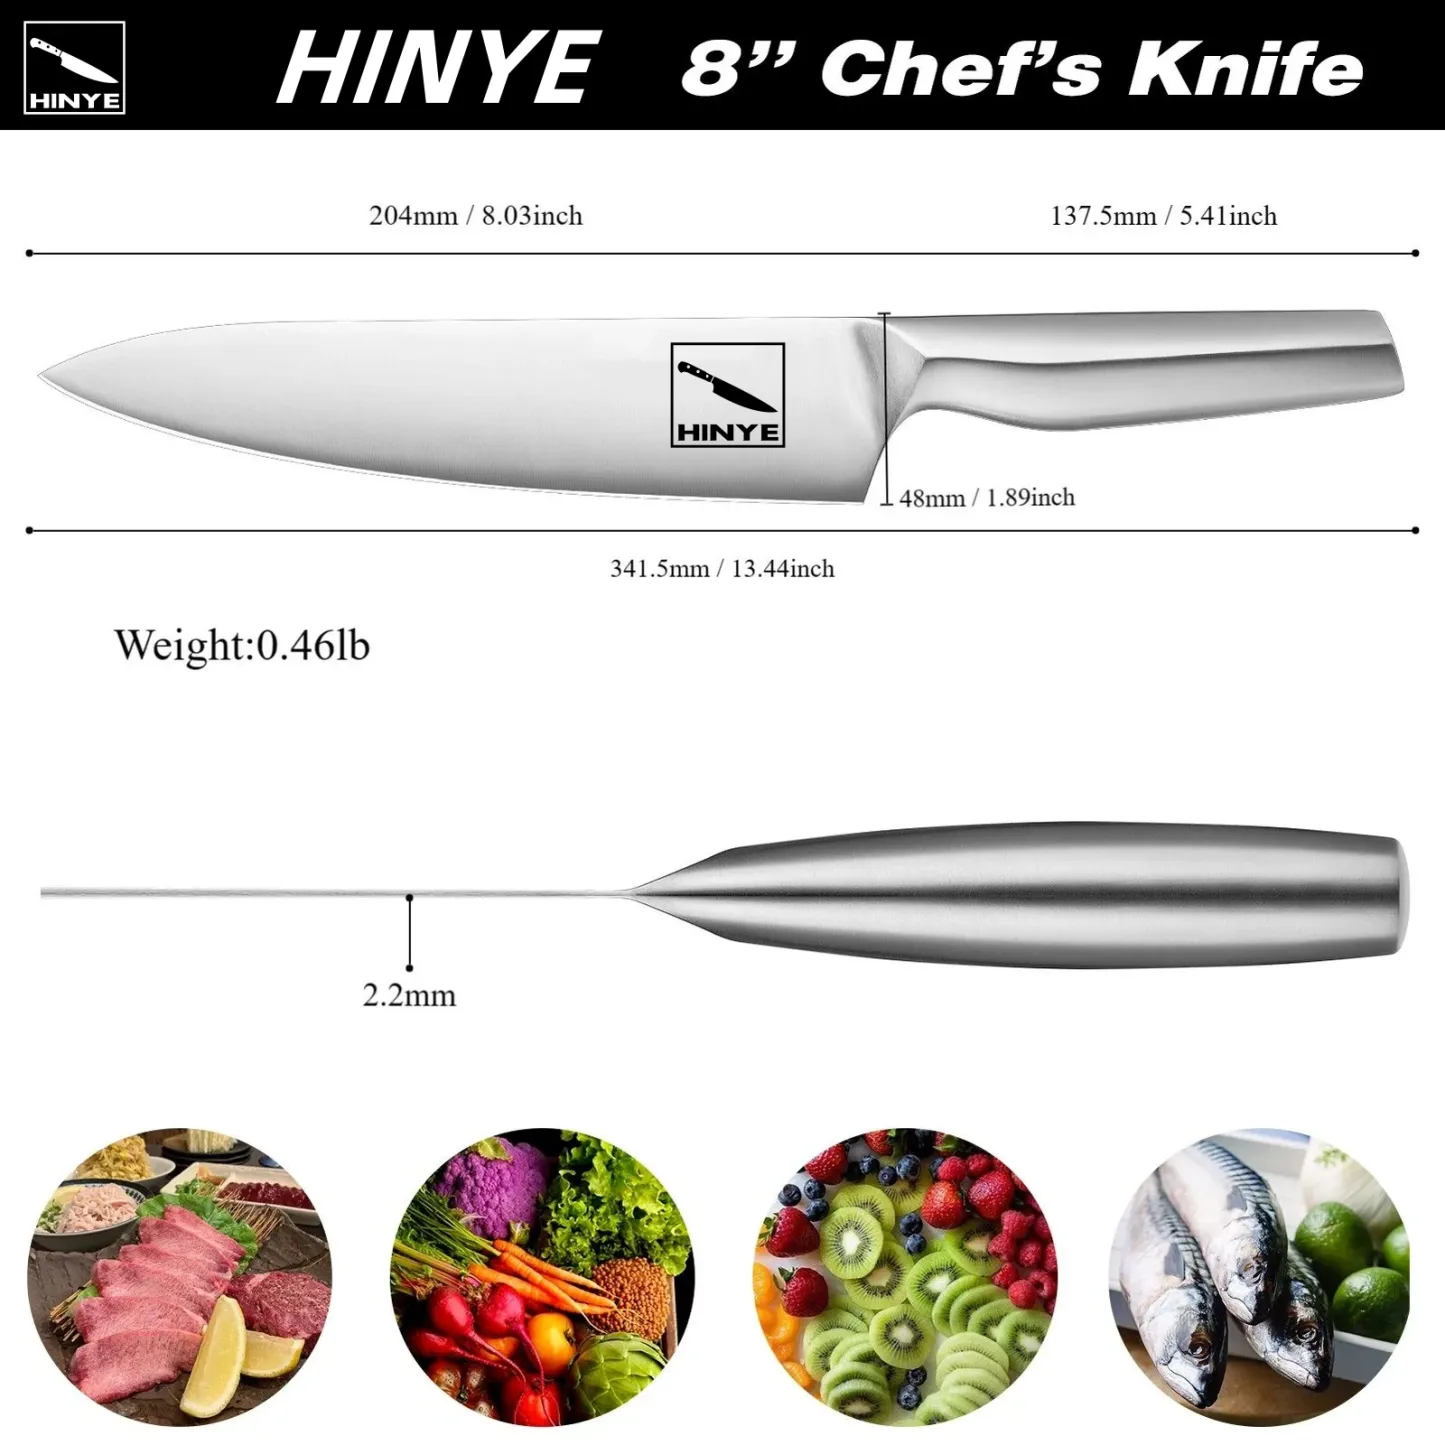 Hinye-Contour 8" Chef